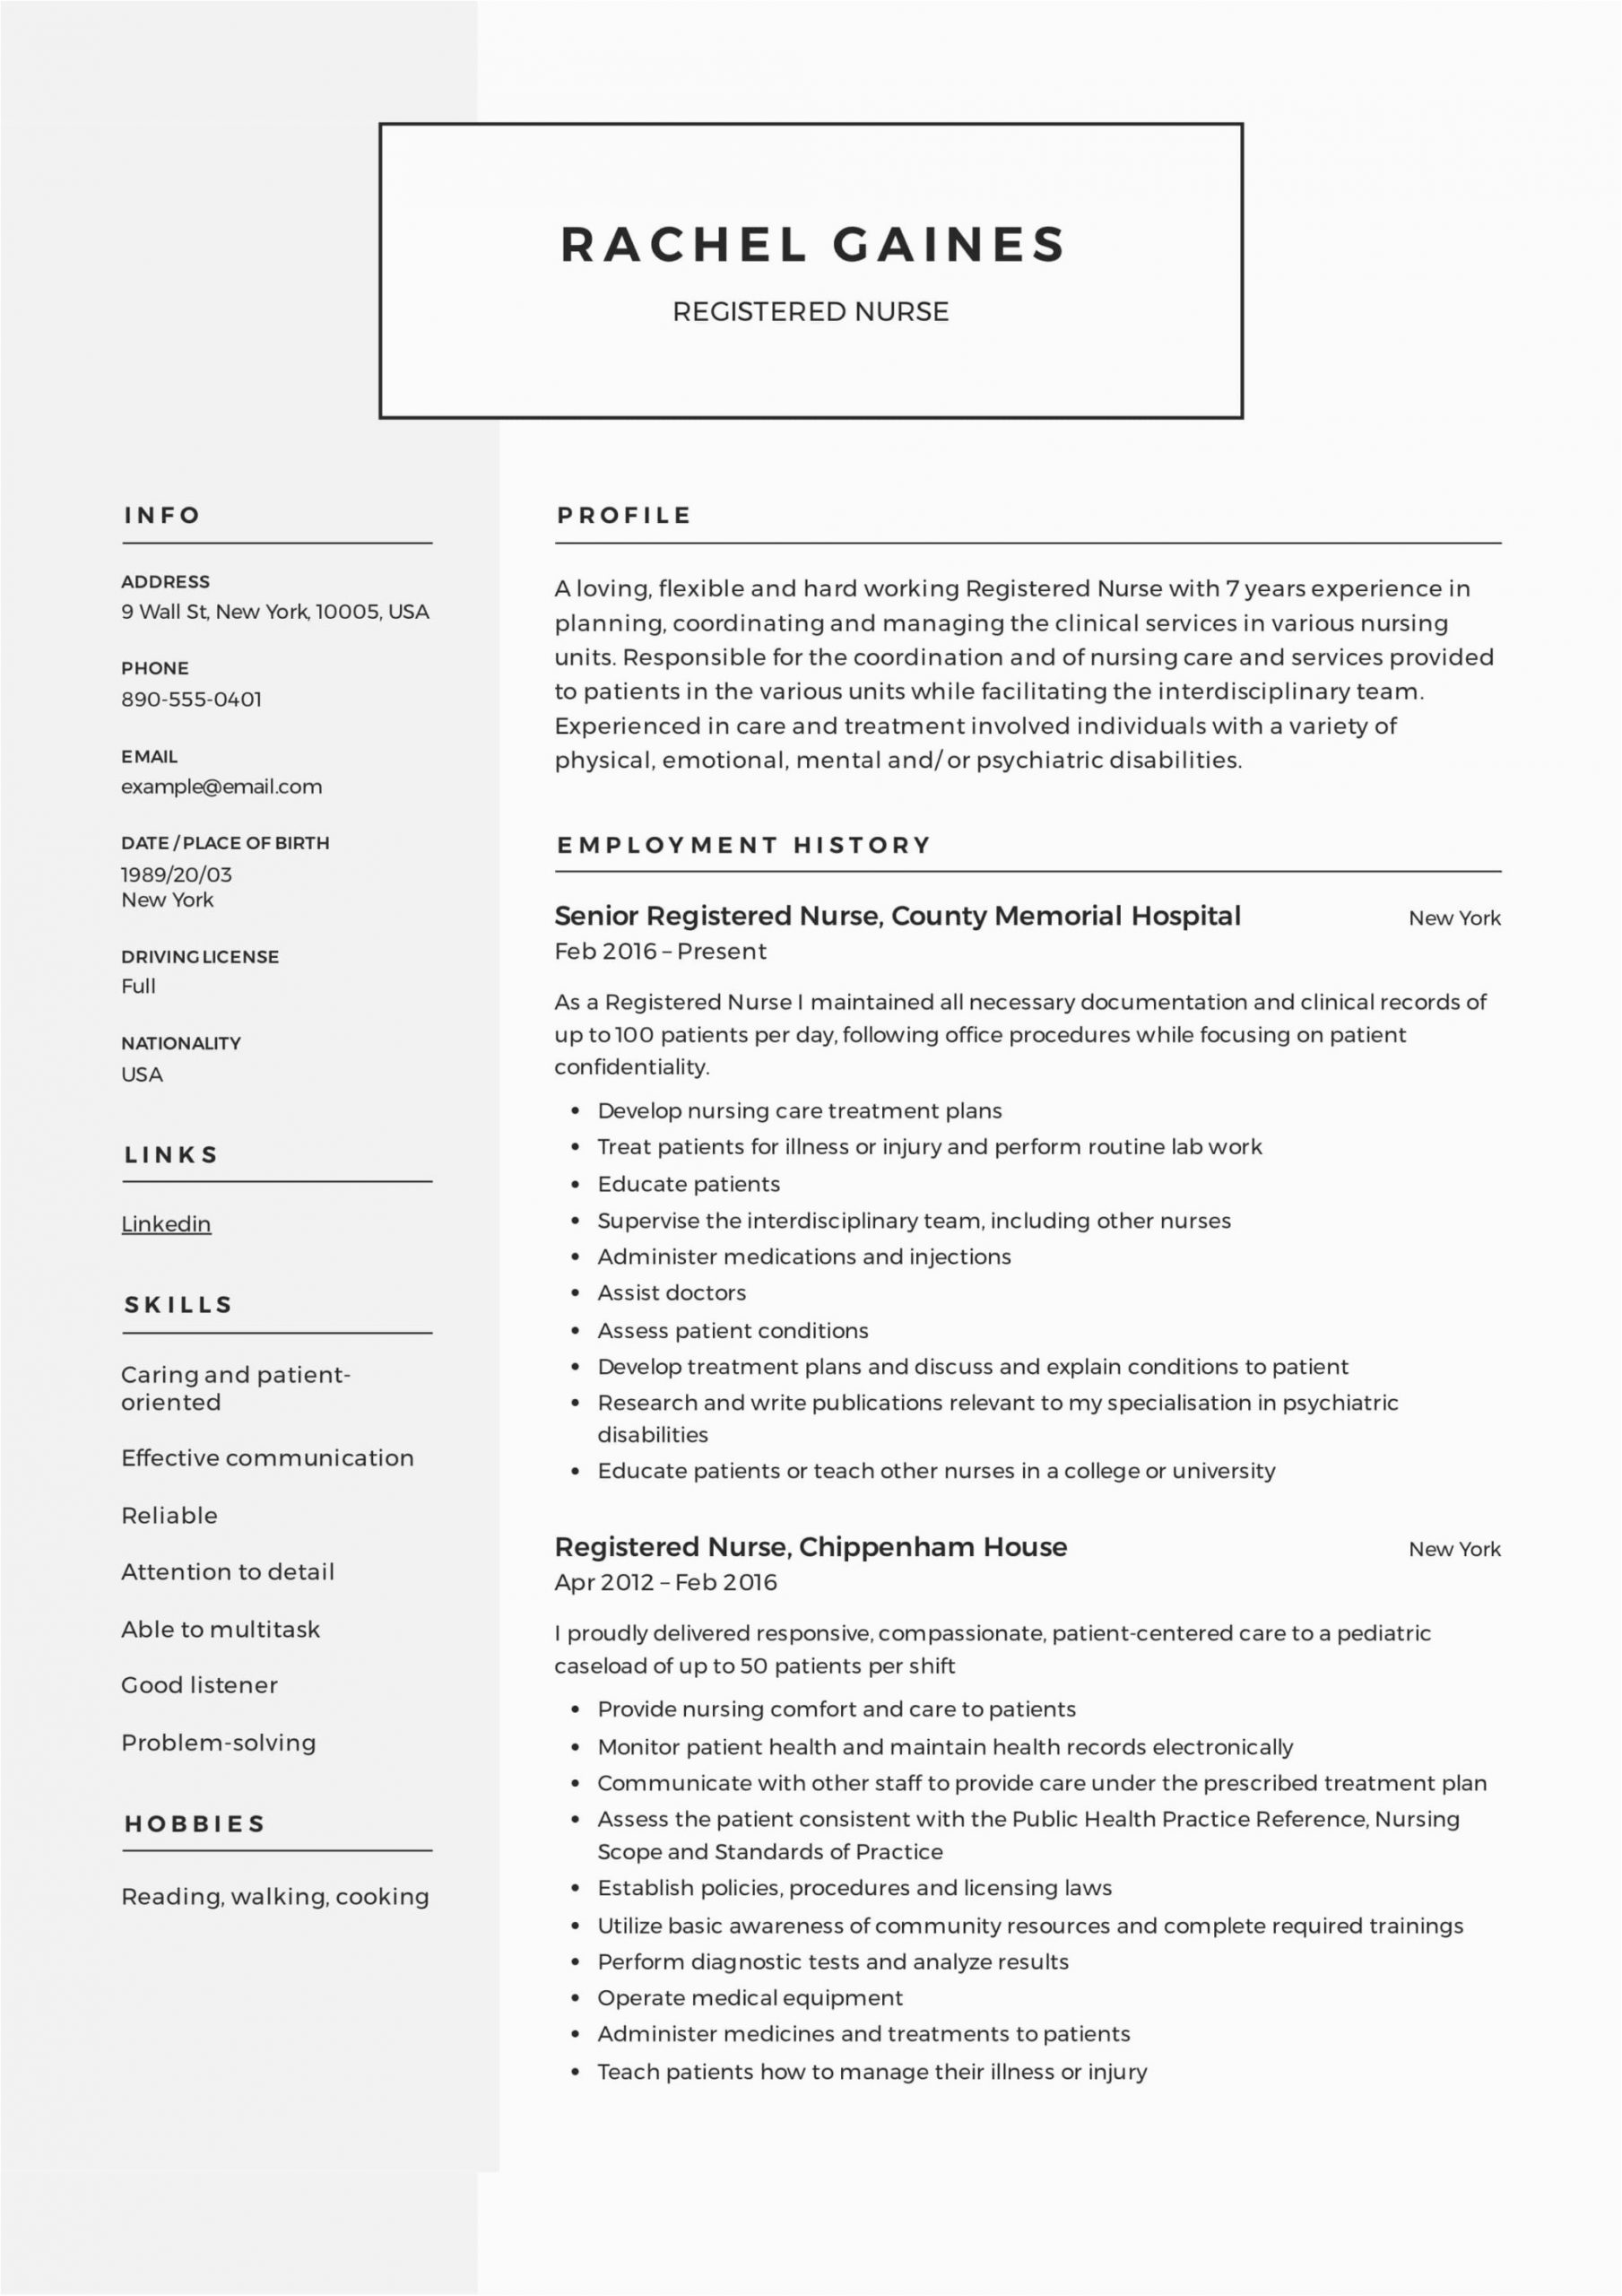 Sample Resume for A Nurse Position Registered Nurse Resume Sample & Writing Guide